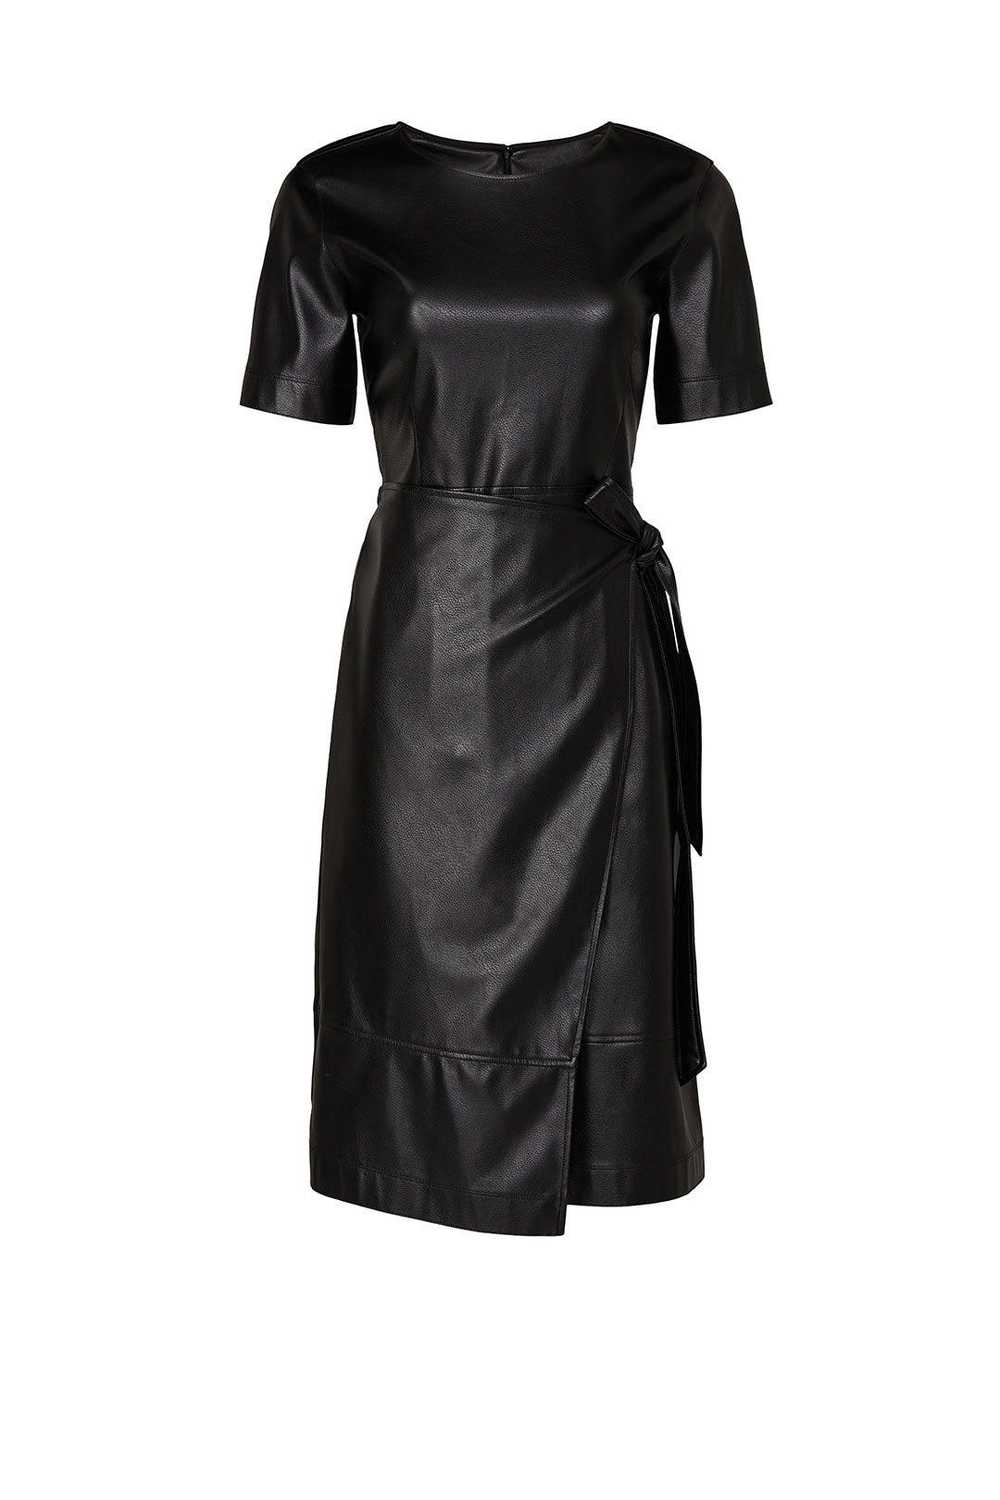 Natori Black Faux Leather Wrap Dress - image 5